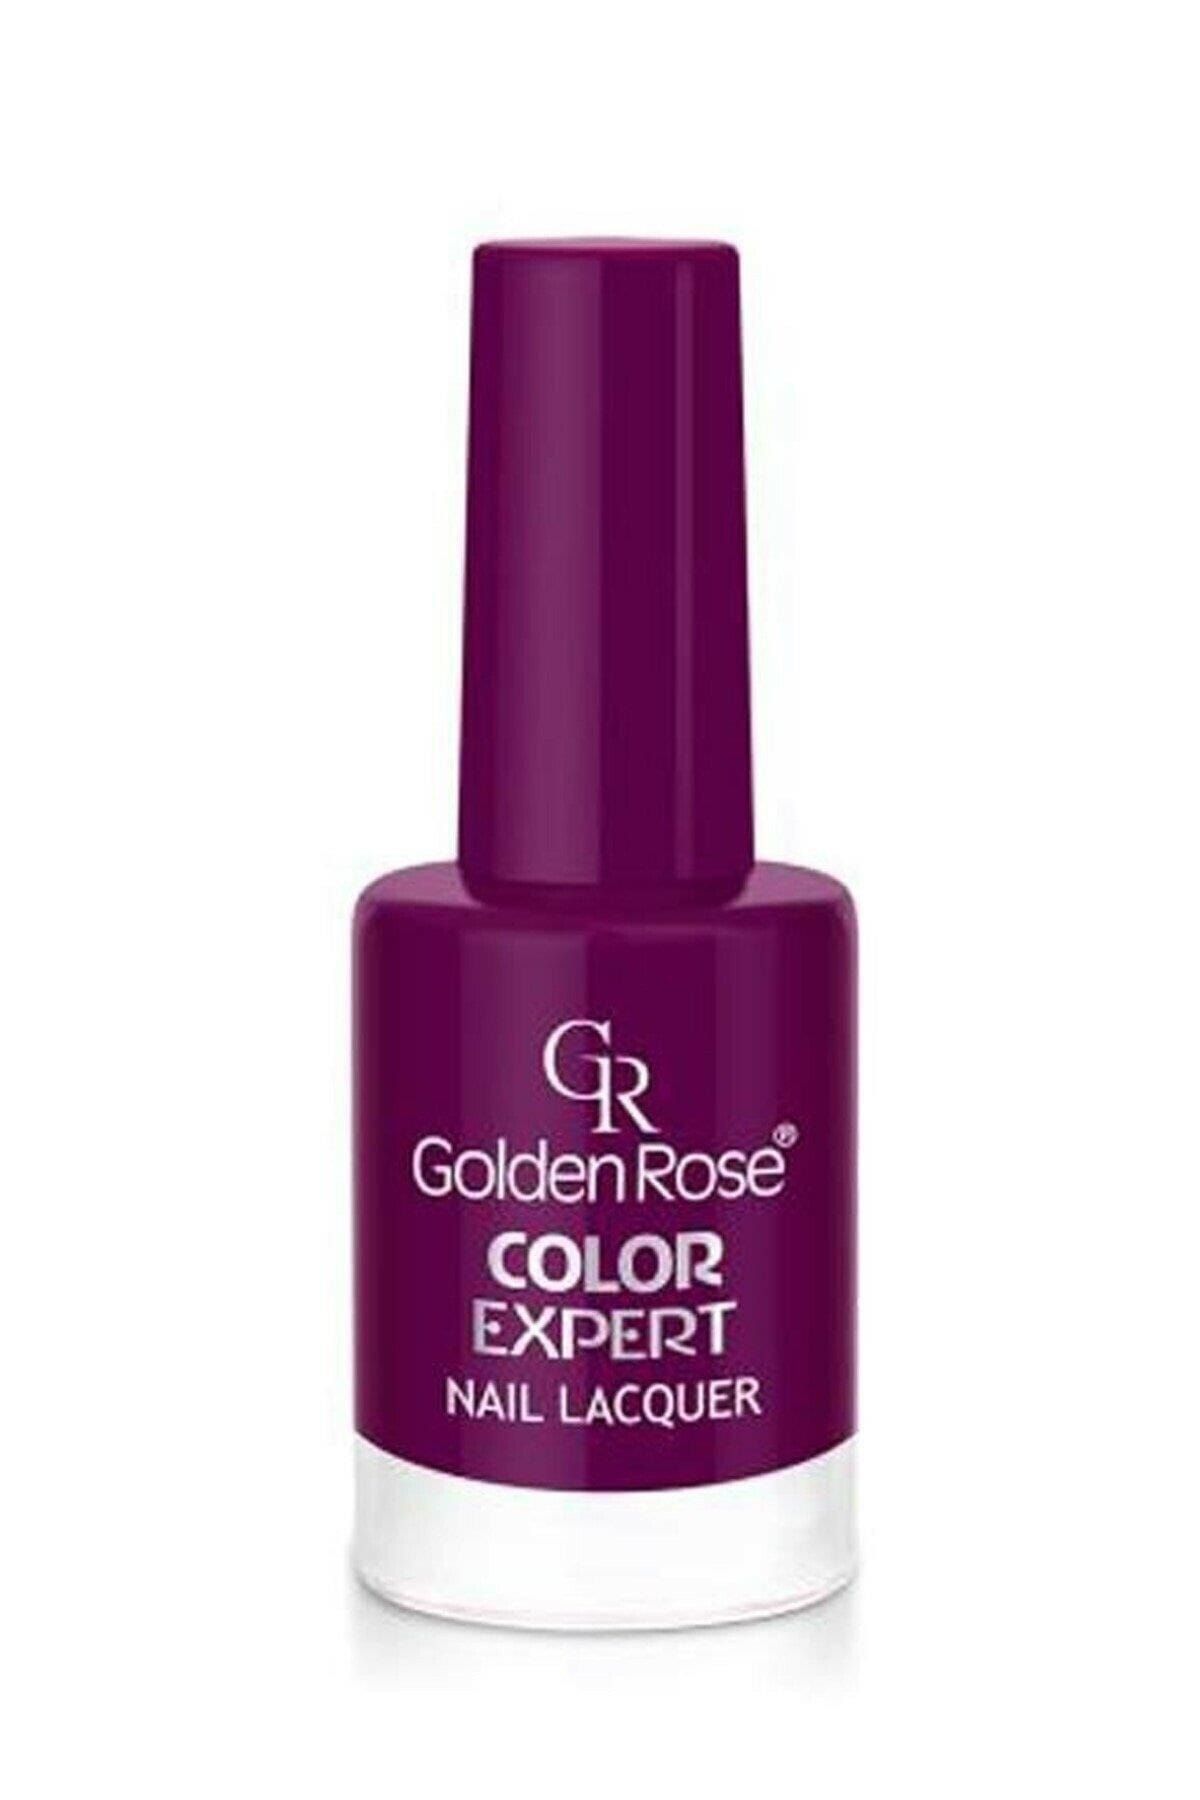 Golden Rose Oje - Color Expert Nail Lacquer No: 28 8691190703288 Kategori: Oje